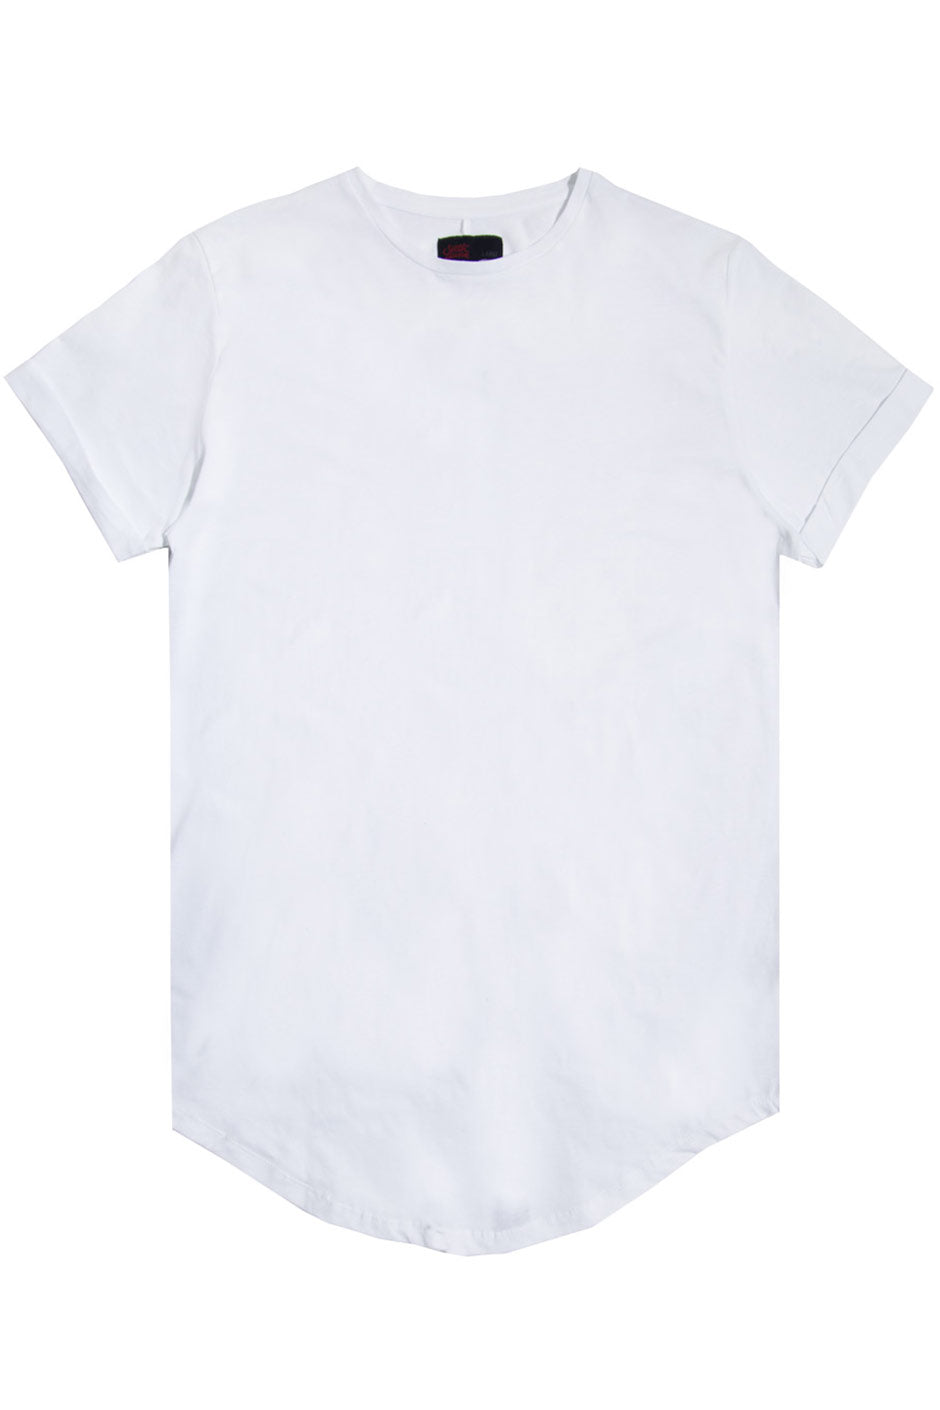 Sixth June - T-shirt oversize zip blanc 1146C